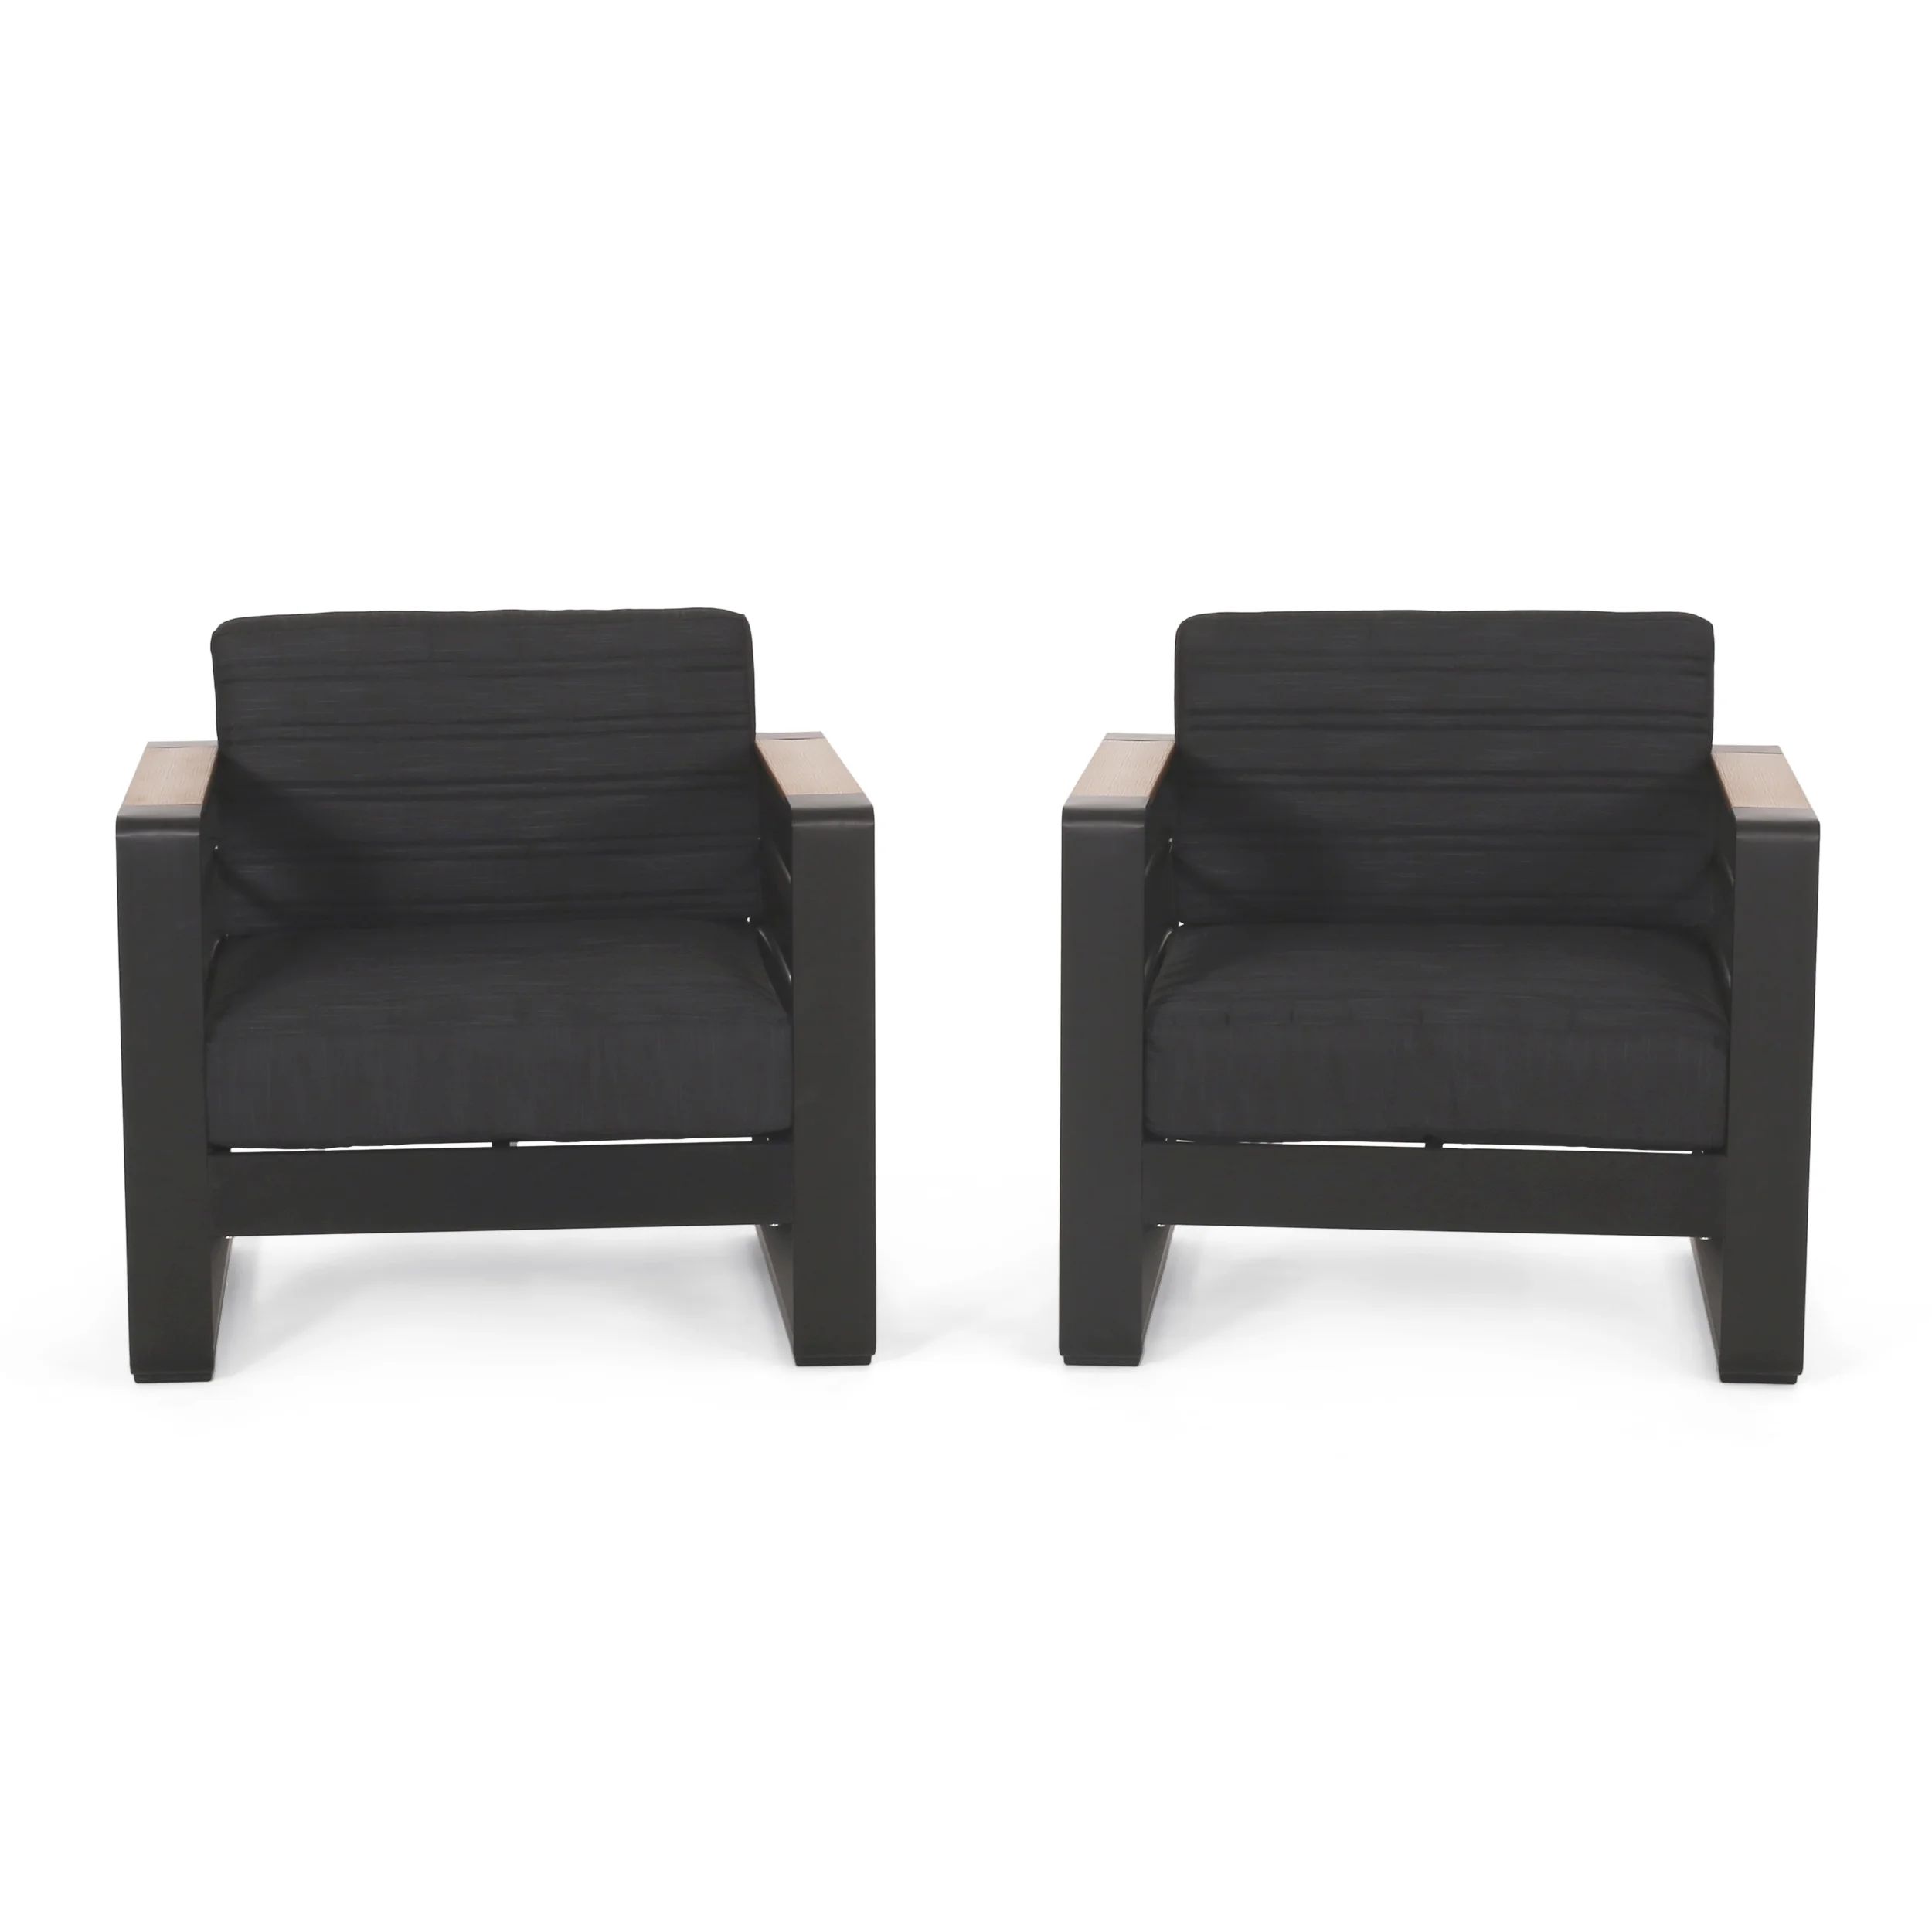 Ridgeway Aluminum Outdoor Club Chairs, Set of 2, Dark Gray, Natural, and Black | Walmart (US)